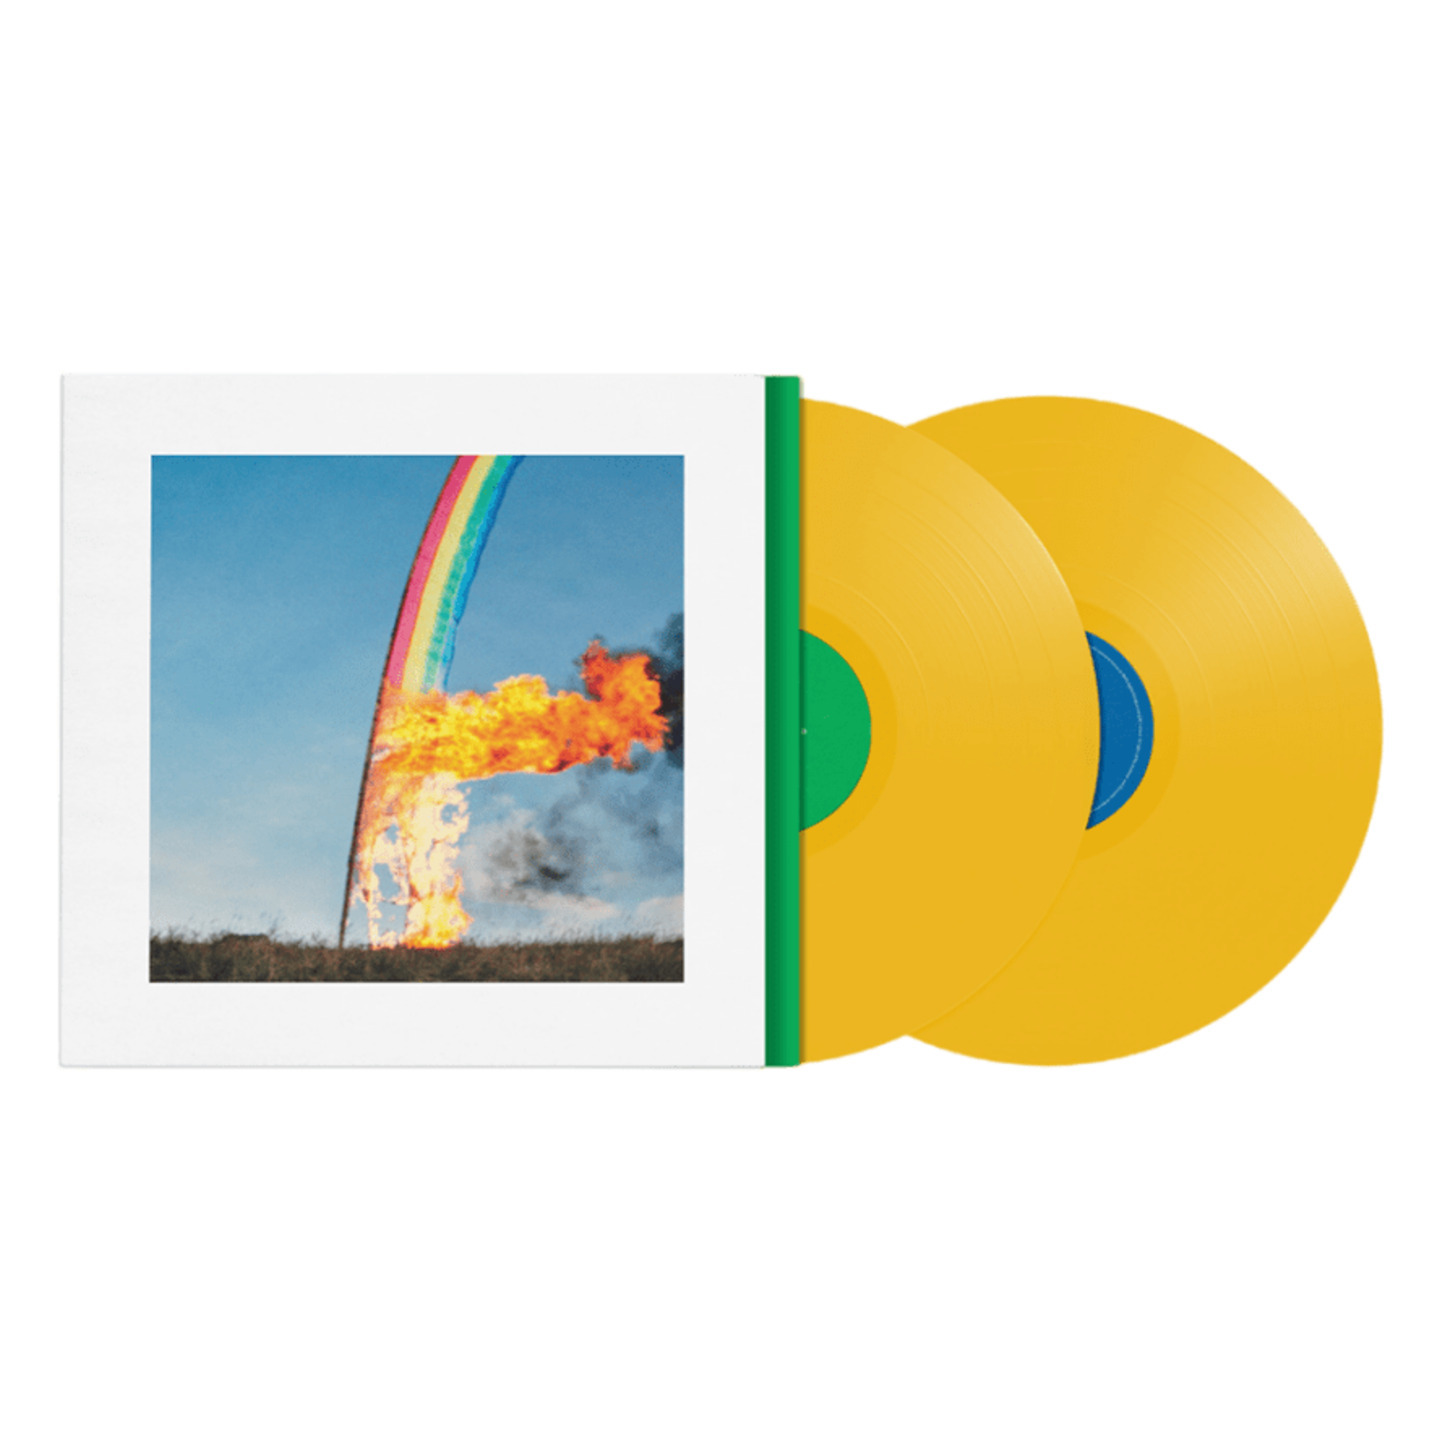 SIGUR ROS - Atta 2xLP Yellow vinyl